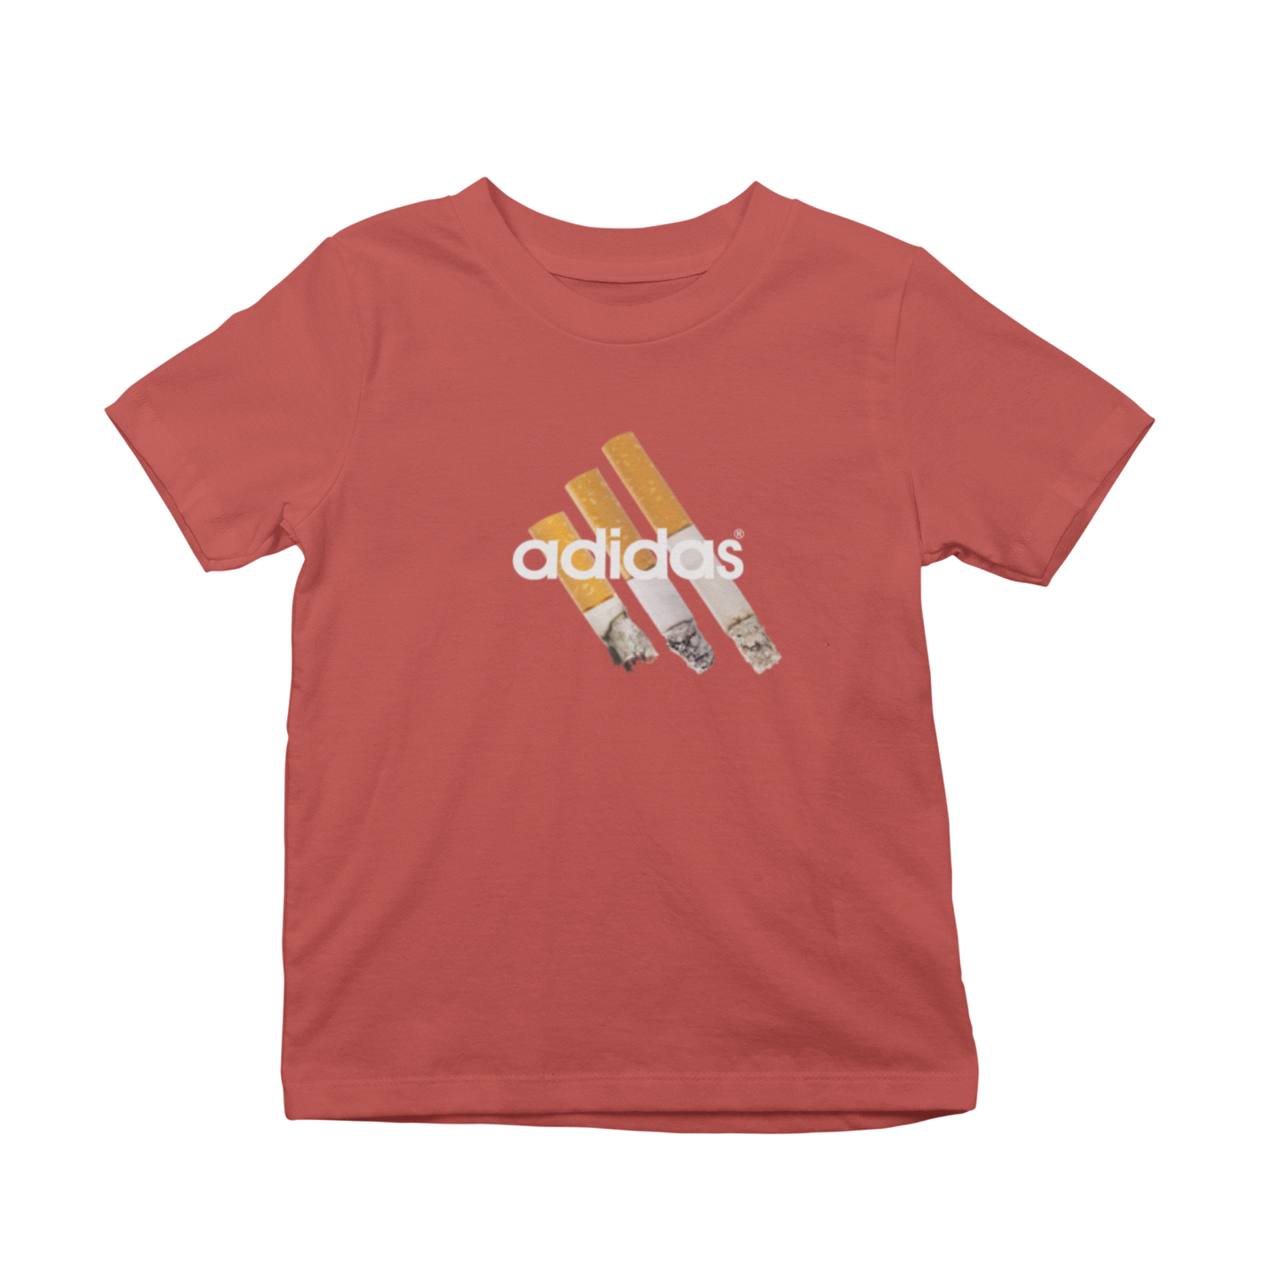 Adidas Cigarette Logo T-Shirt